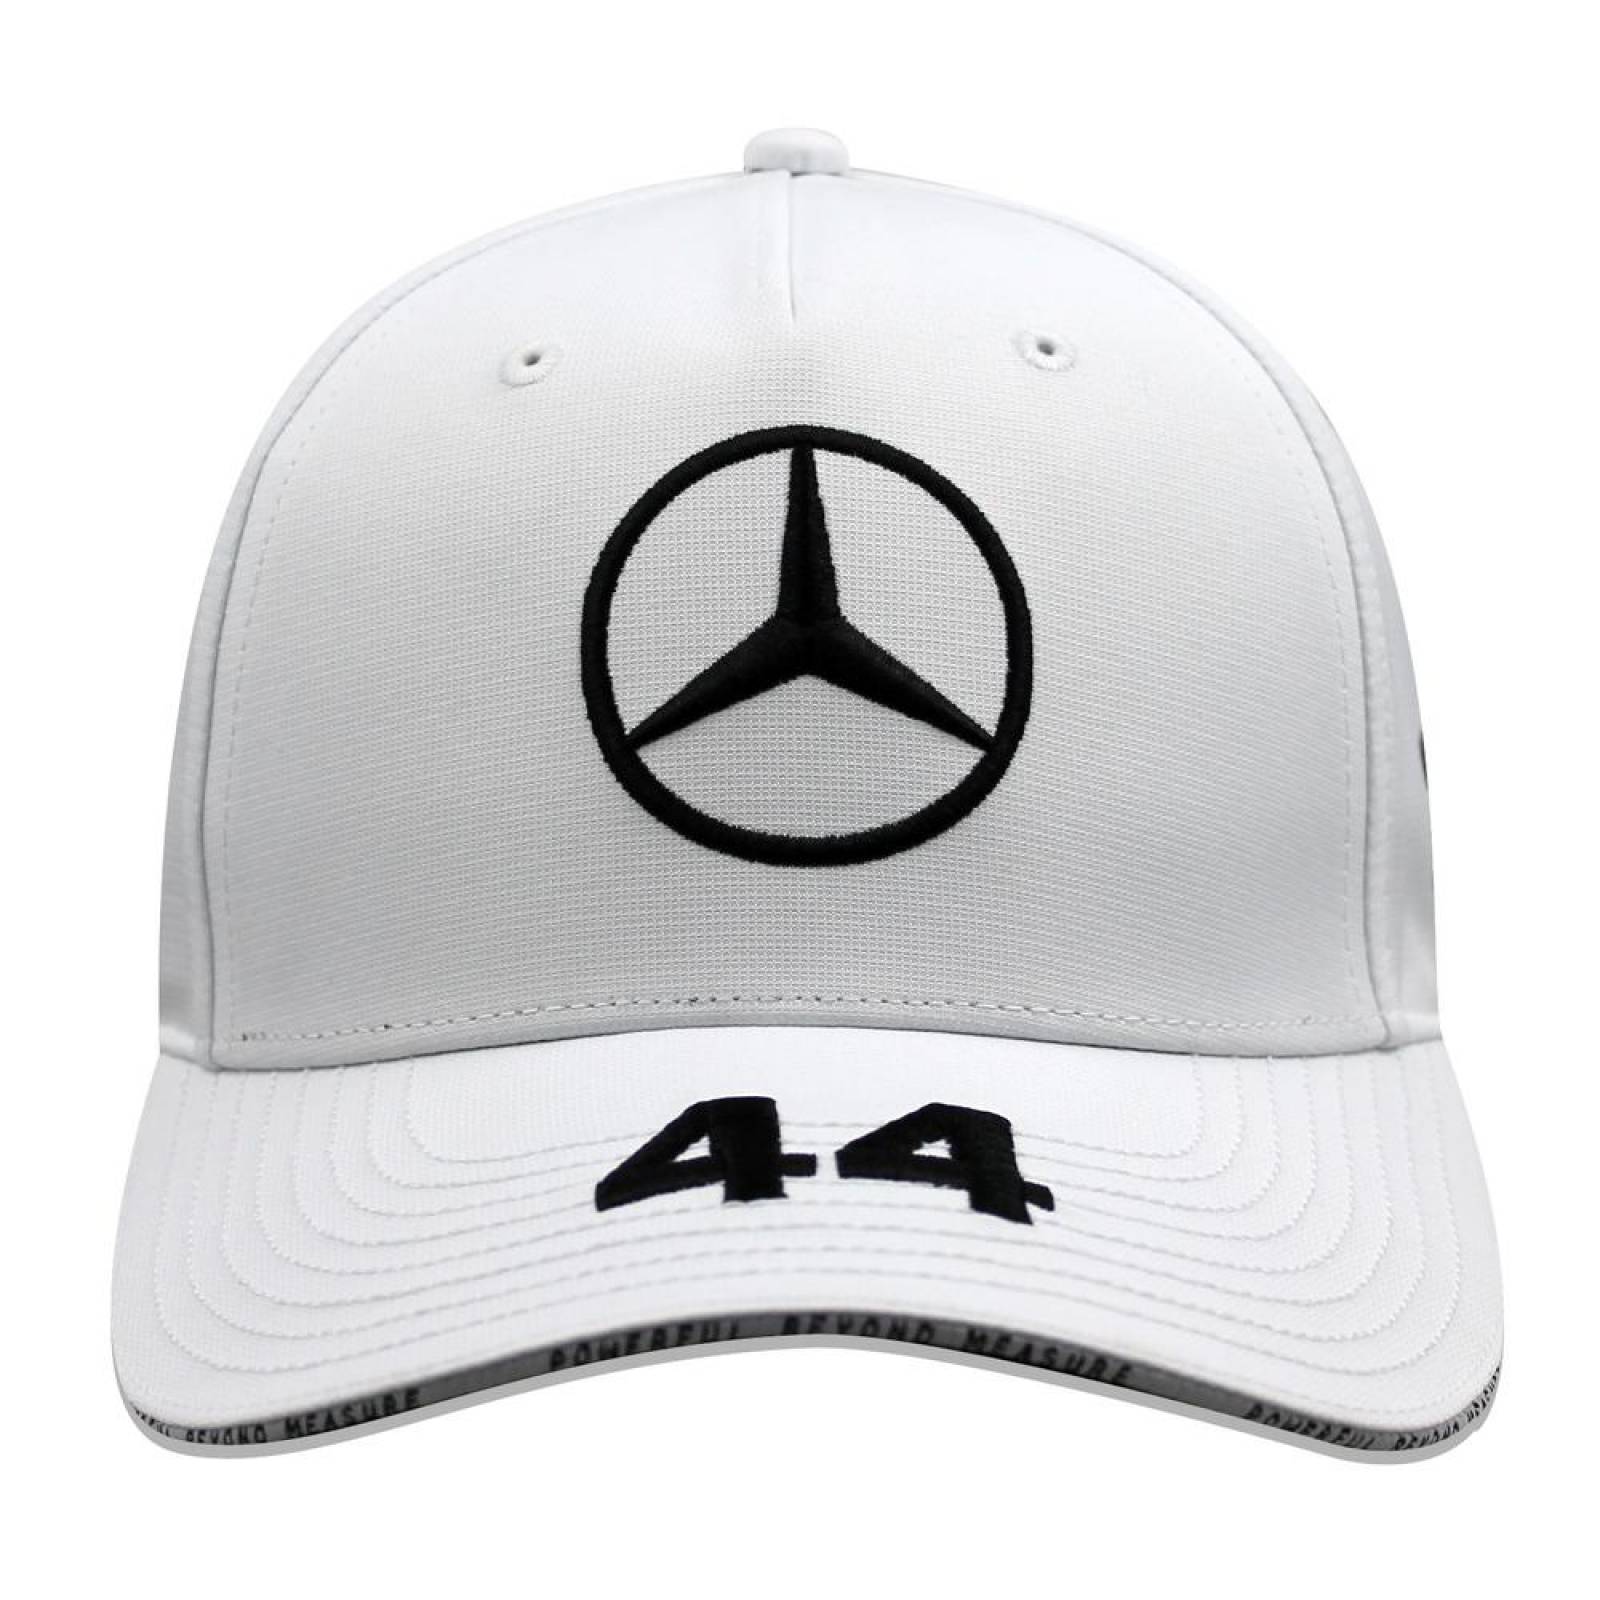 Gorra F1 Merdeces Benz Lewis Driver 44 Blanco 